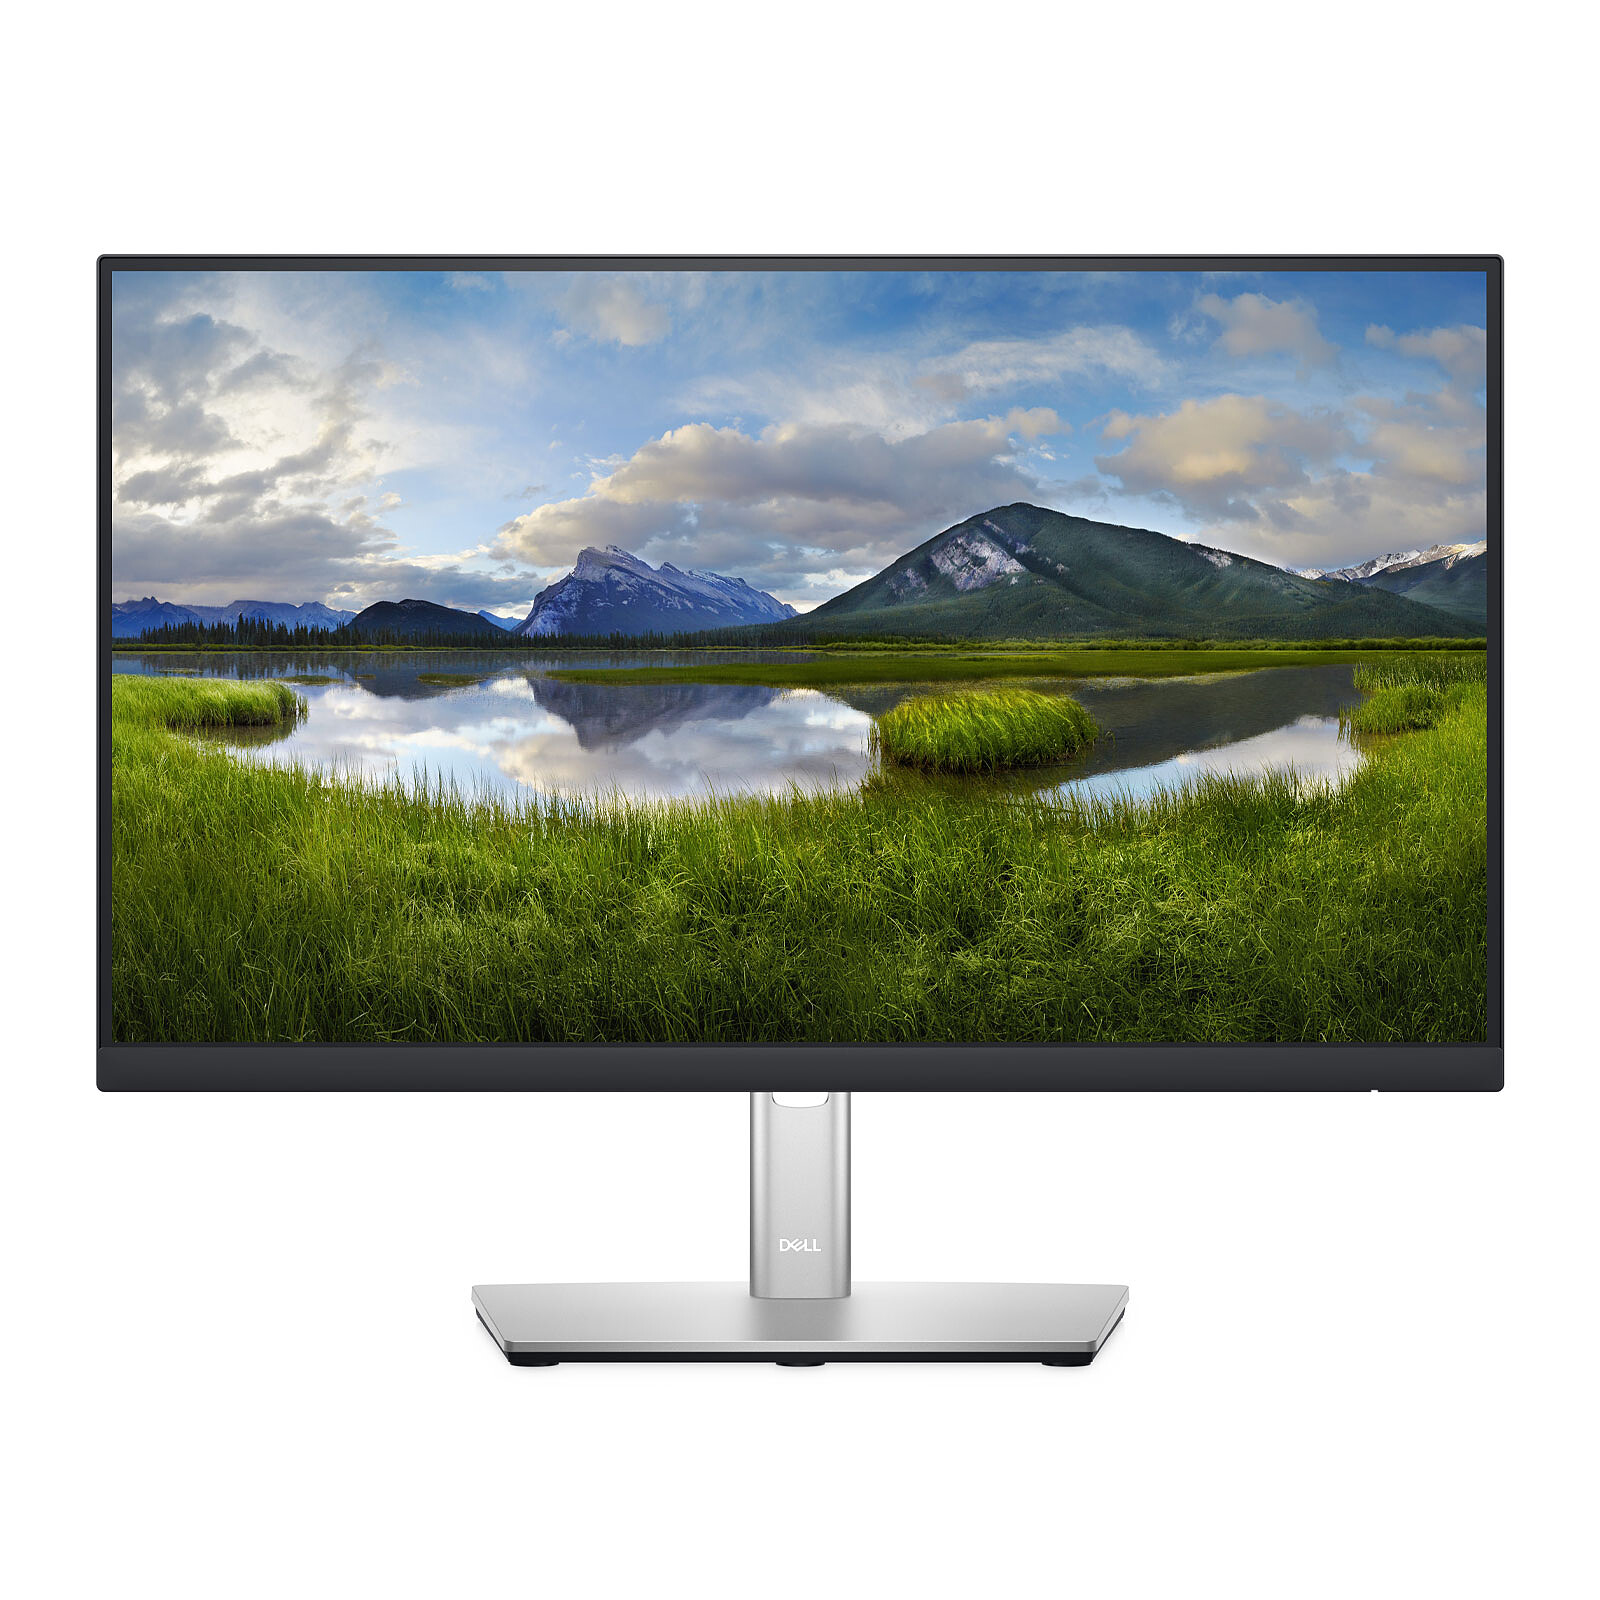 HP 22 LED - VH22 (X0N05AA) - Ecran PC - Garantie 3 ans LDLC